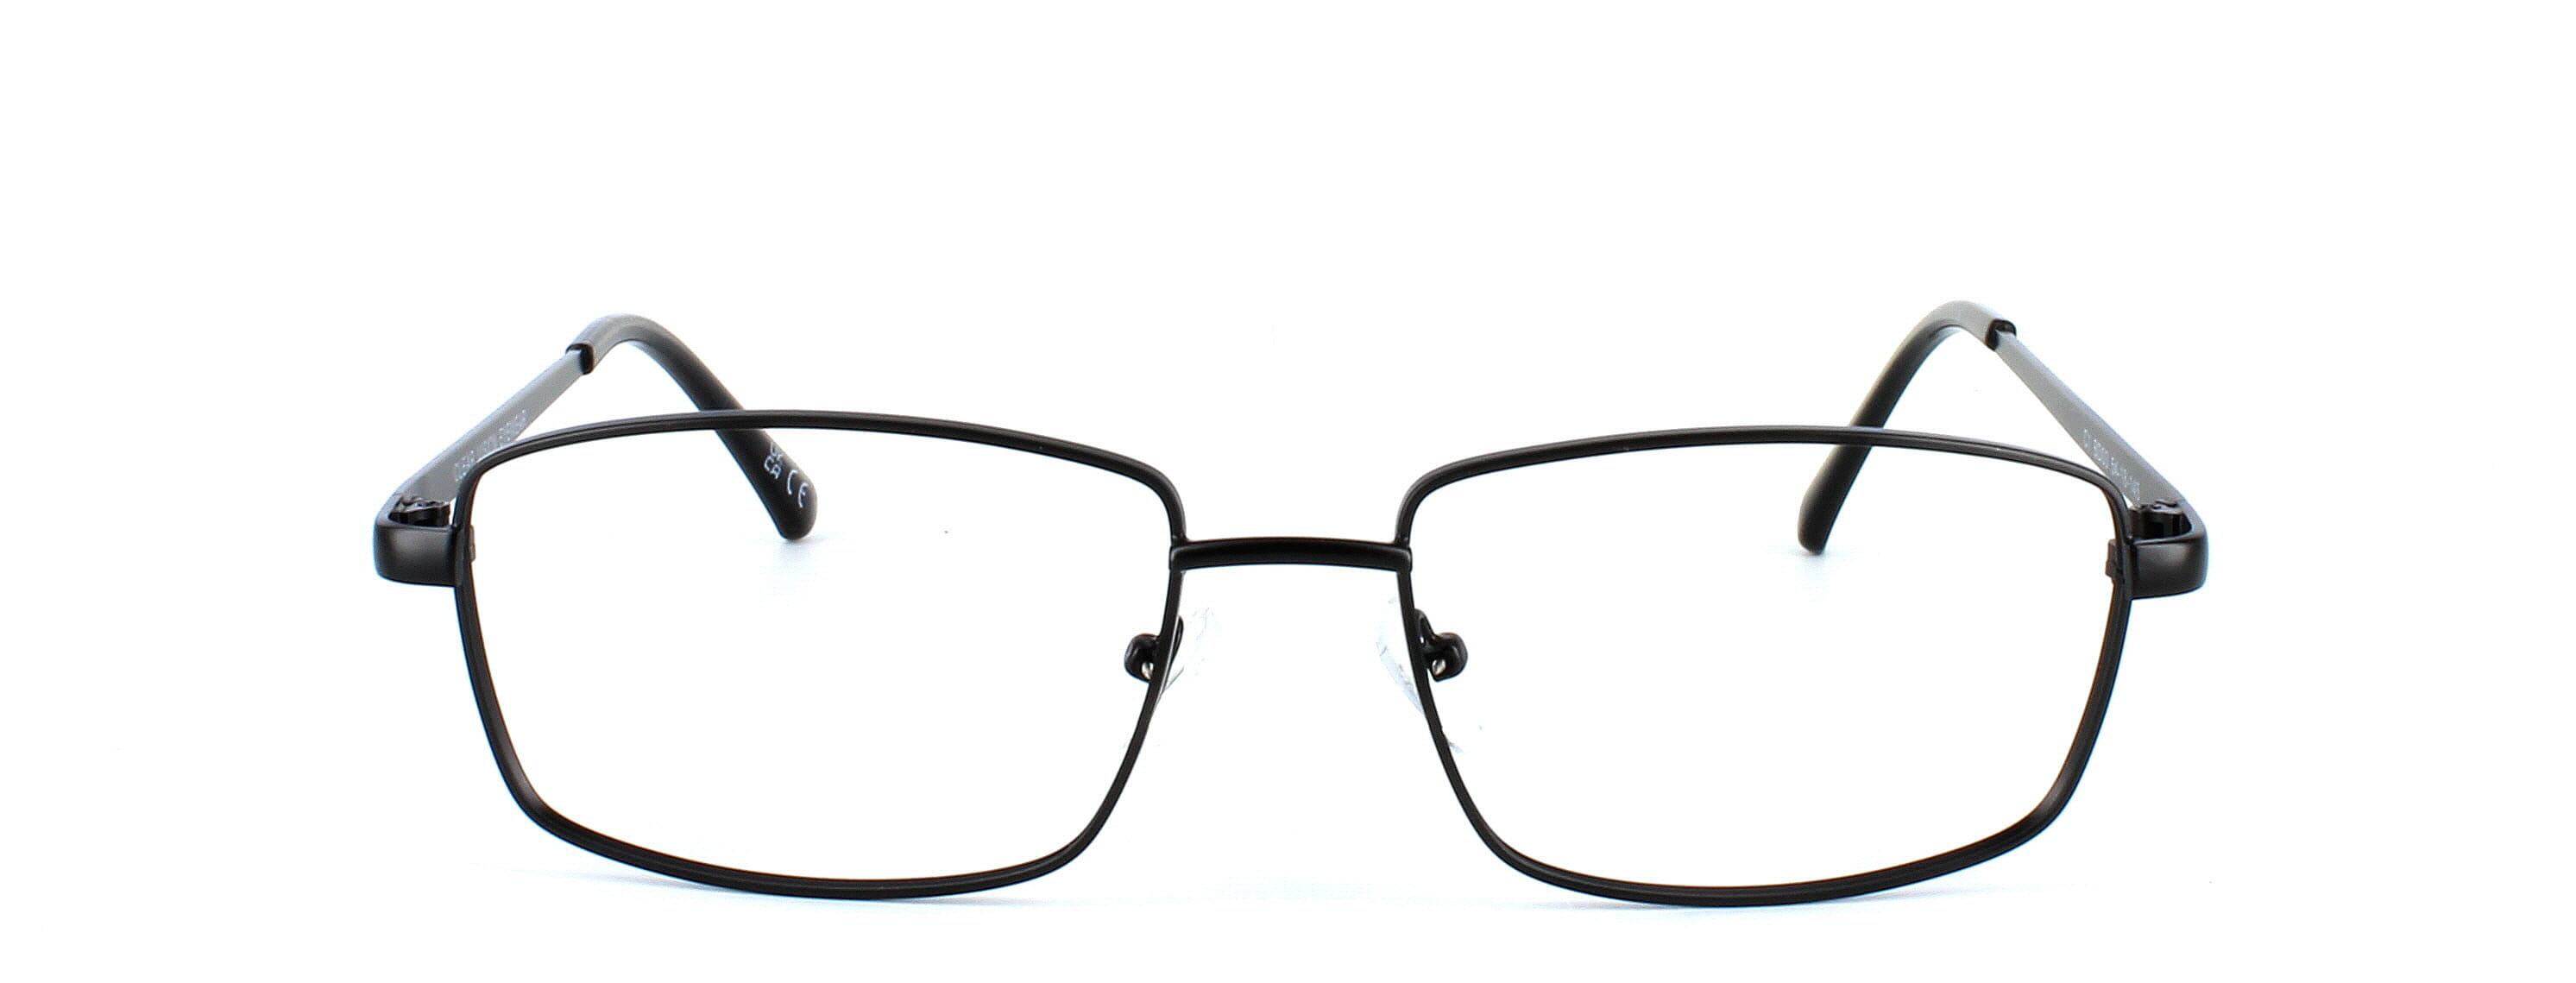 Ventry - Gents rectangular shaped full rim metal glasses - image view 2